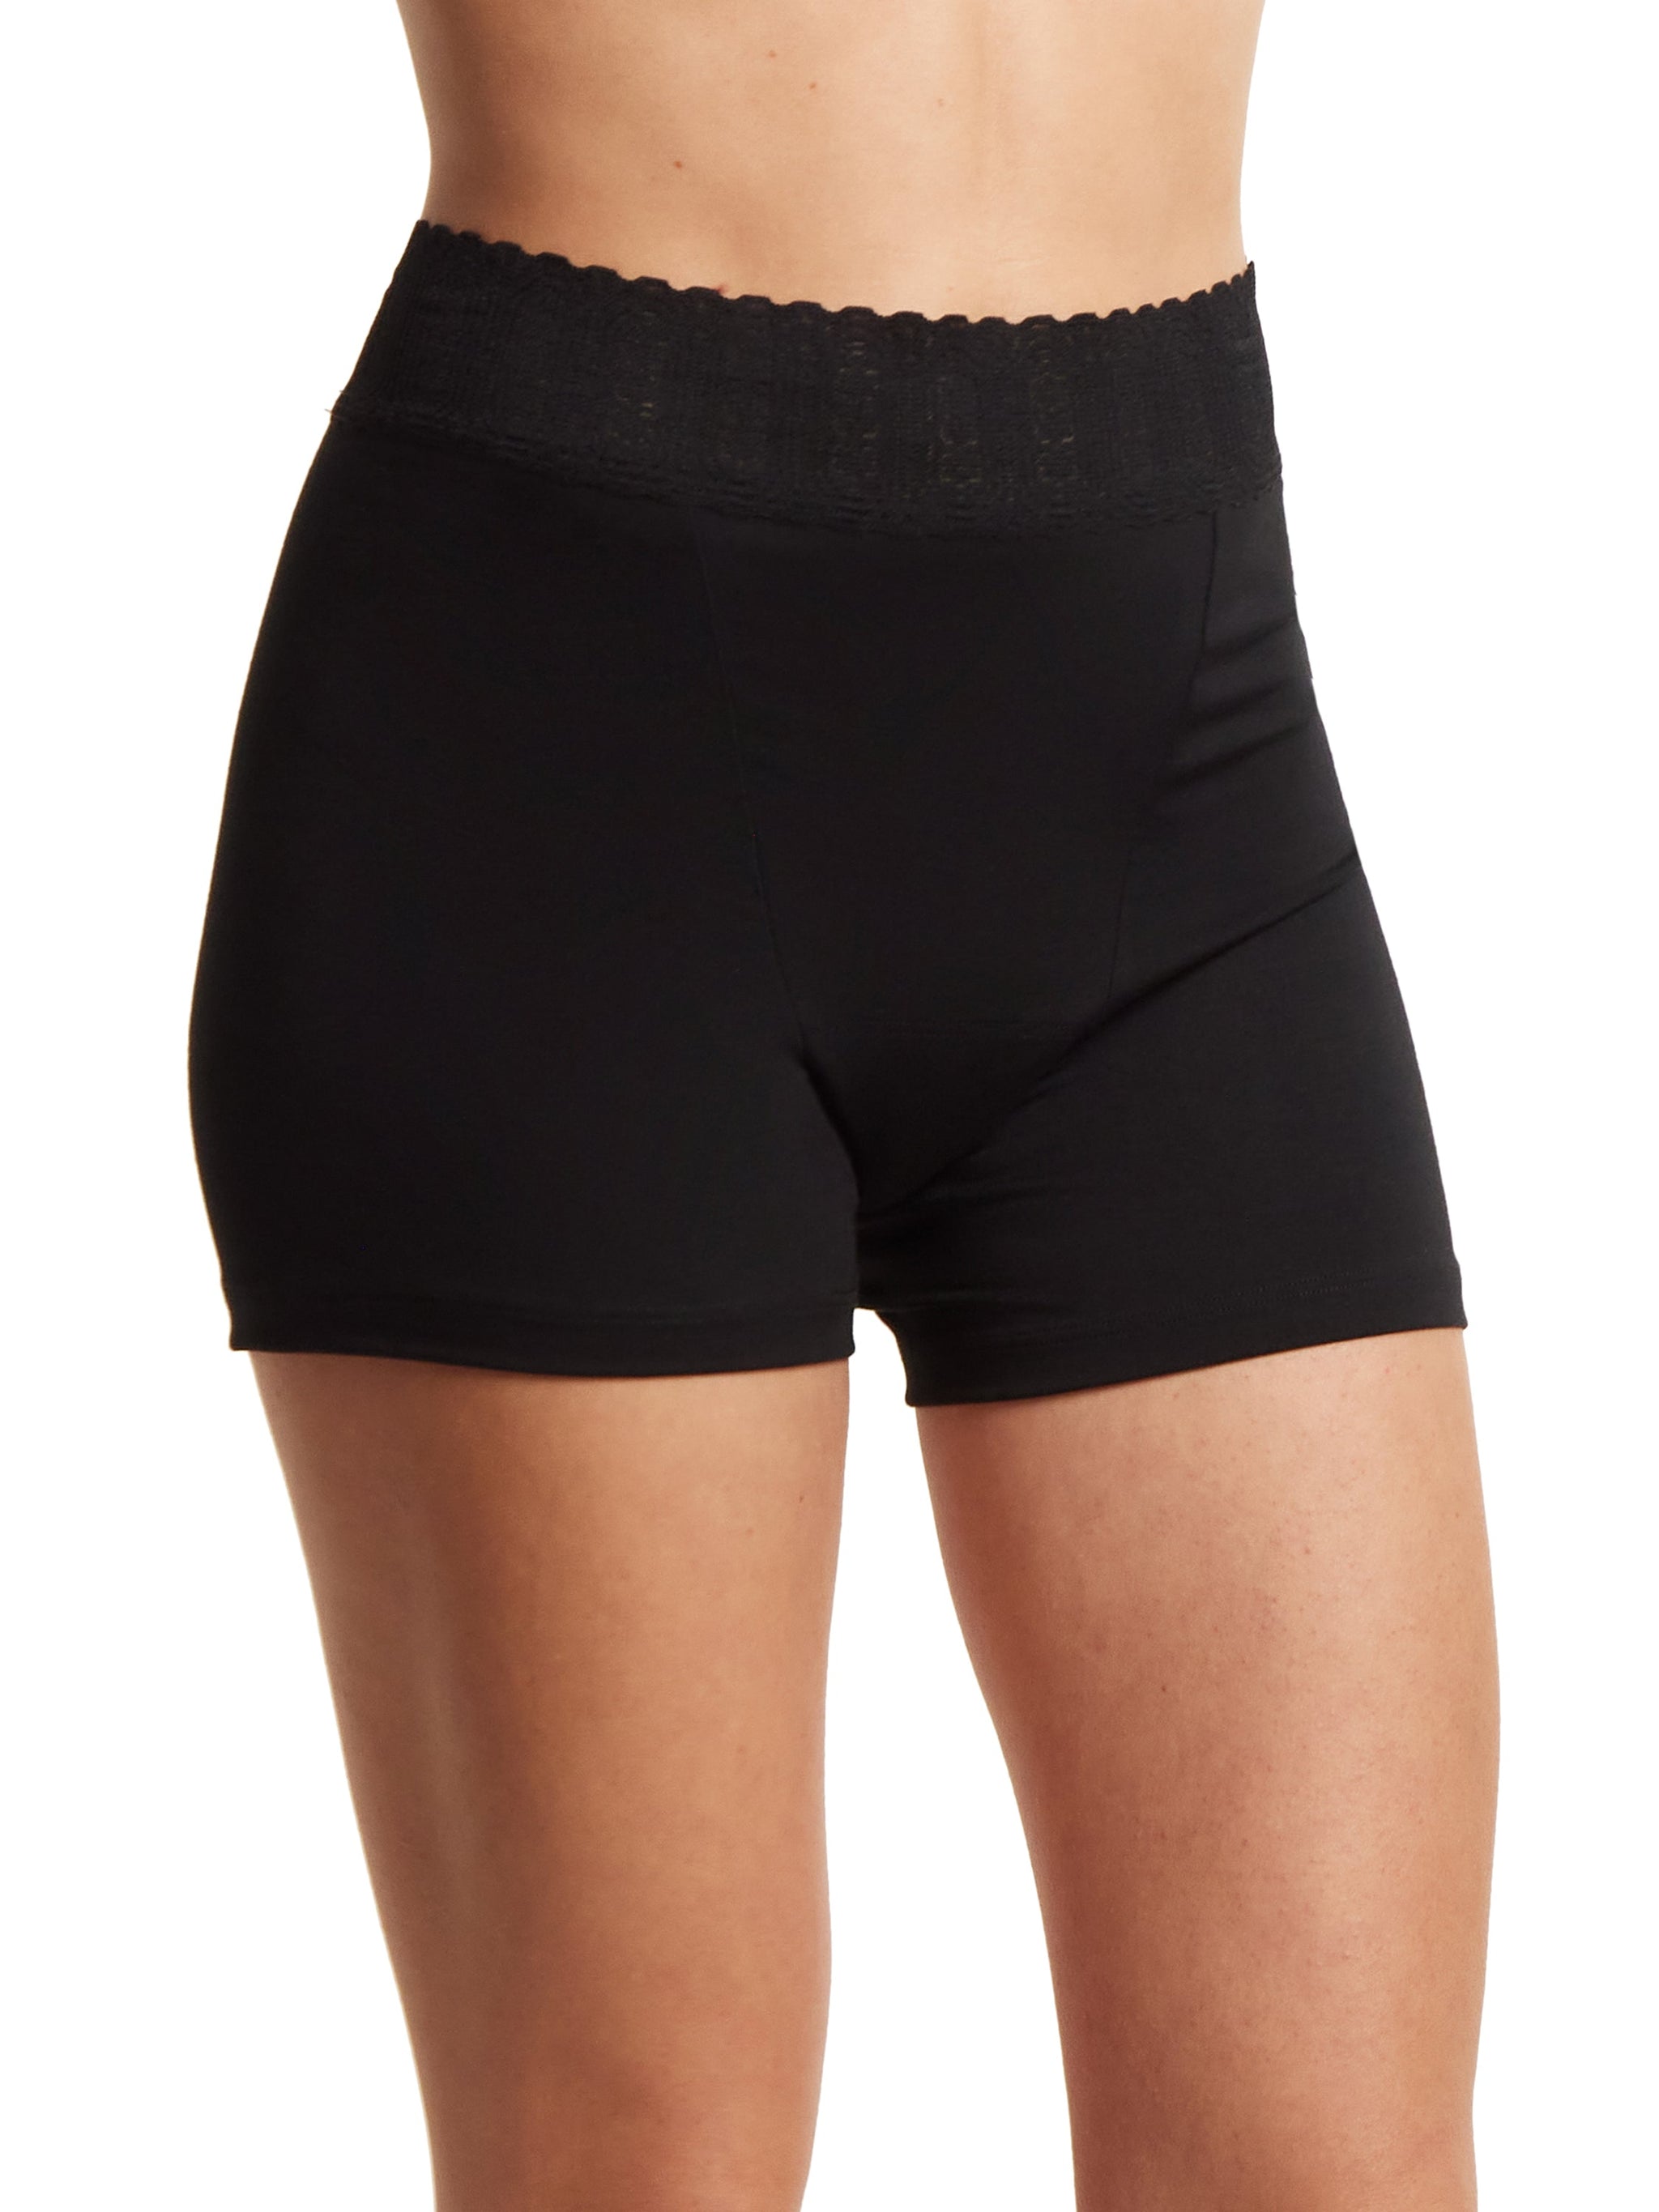 Gubotare Boxer Briefs For Women Womens Lace Boxer Panties Seamless Solid  Color Comfortable Low Waist Panties,Black L